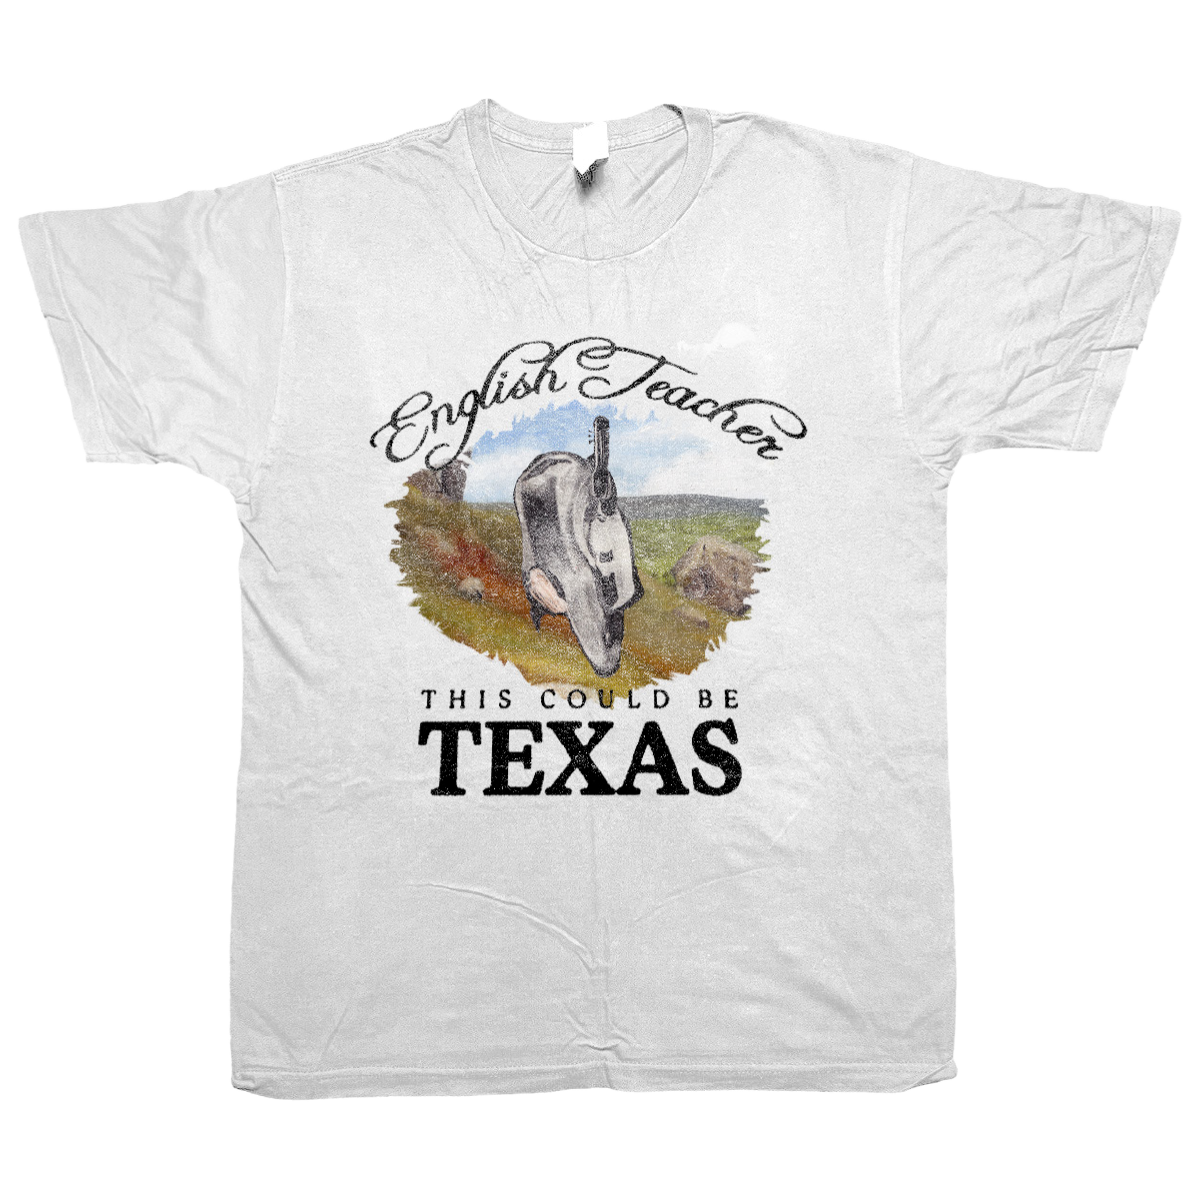 English Teacher - This Could Be Texas: White T-shirt